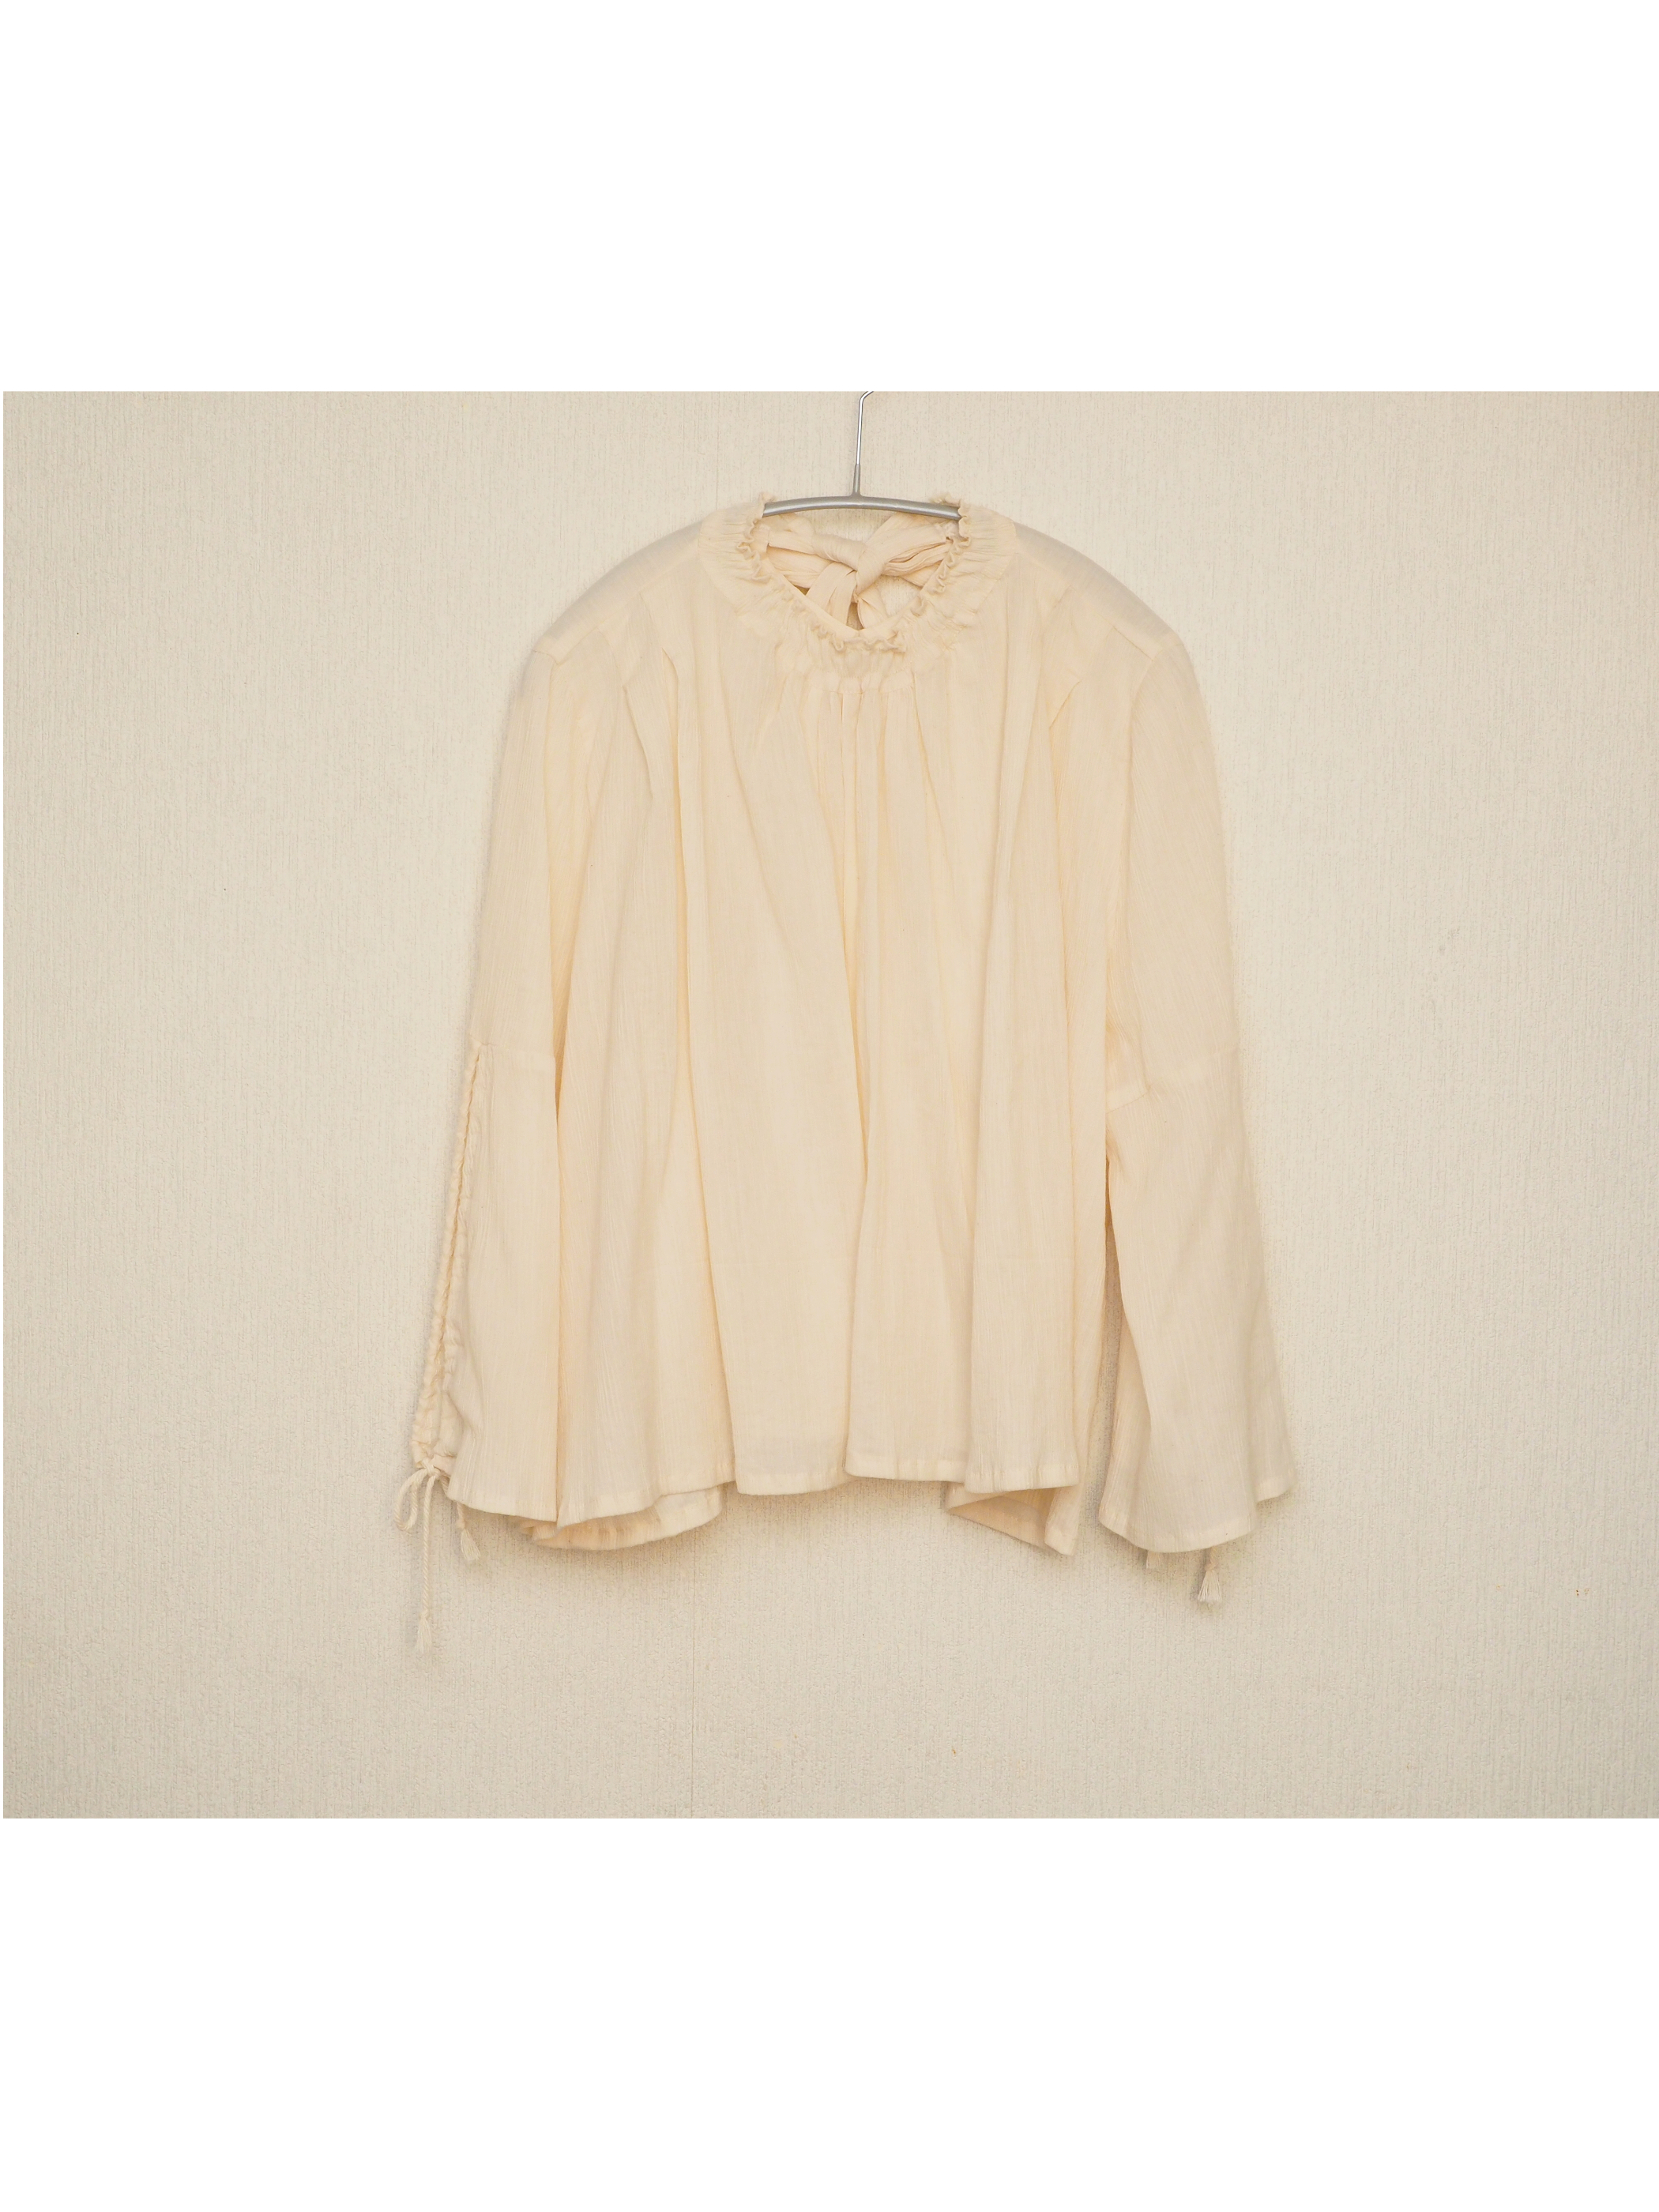 Organic cotton Crape Natural dye blouse バッククローズバージョン